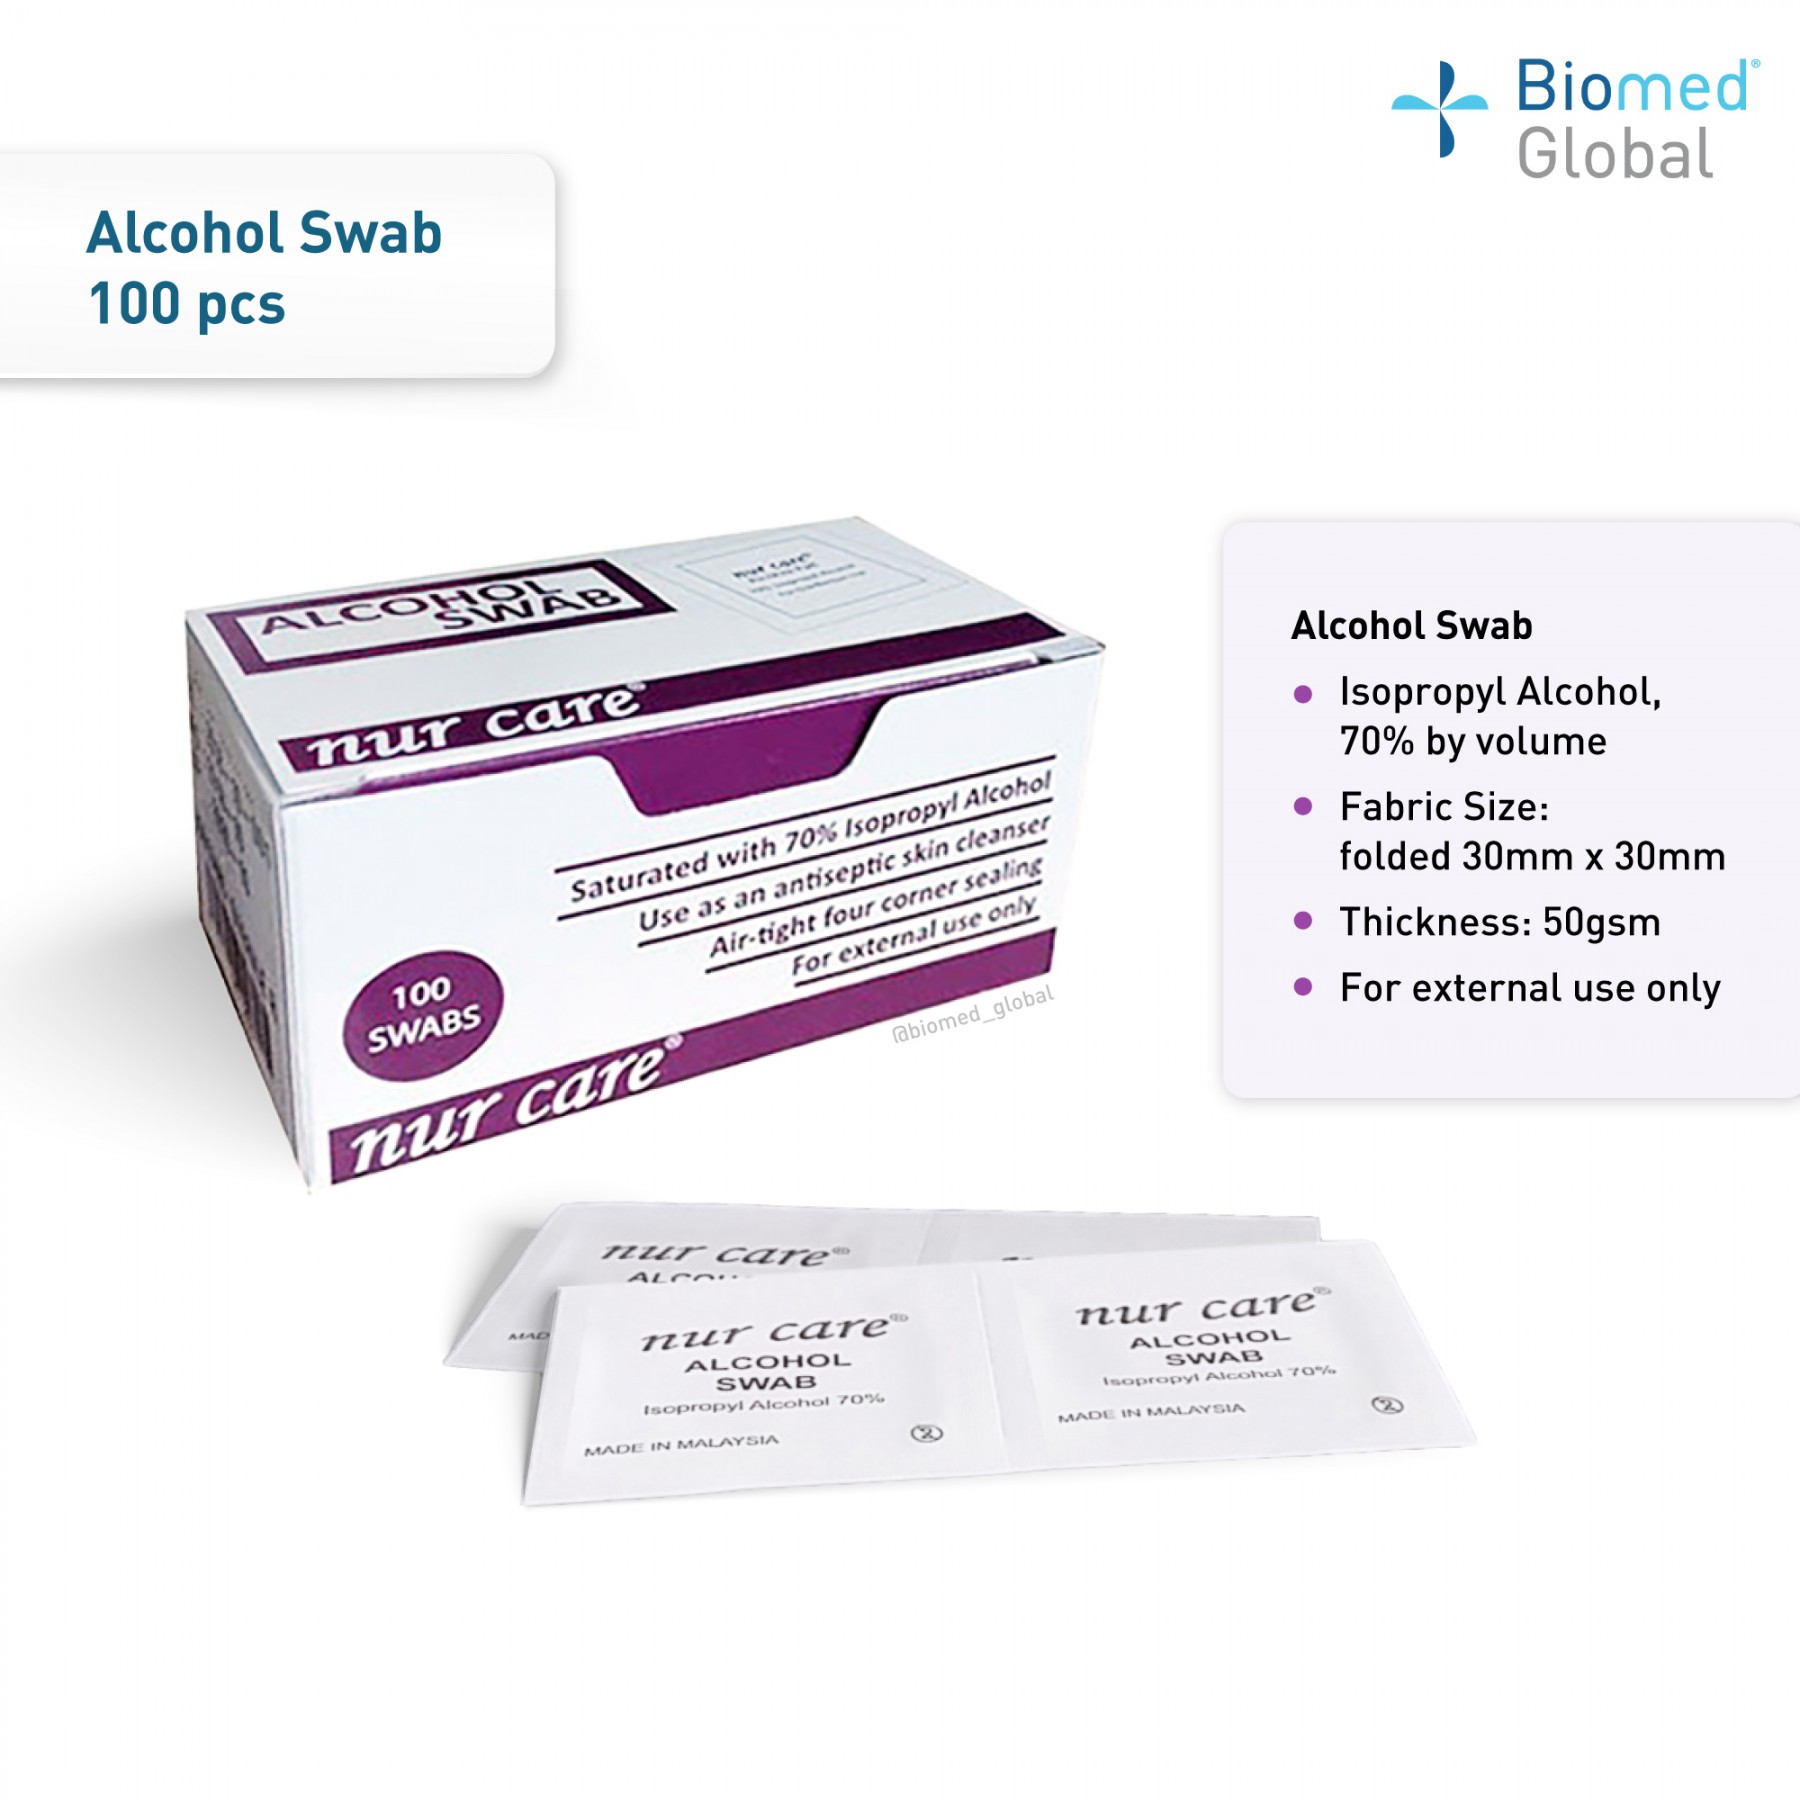  EasyTouch GCU Glucose-Cholesterol-Uric Acid Meter Kit Bundle with 10 Chol Test, 25 Blood Lancet, 100 Alcohol Swabs